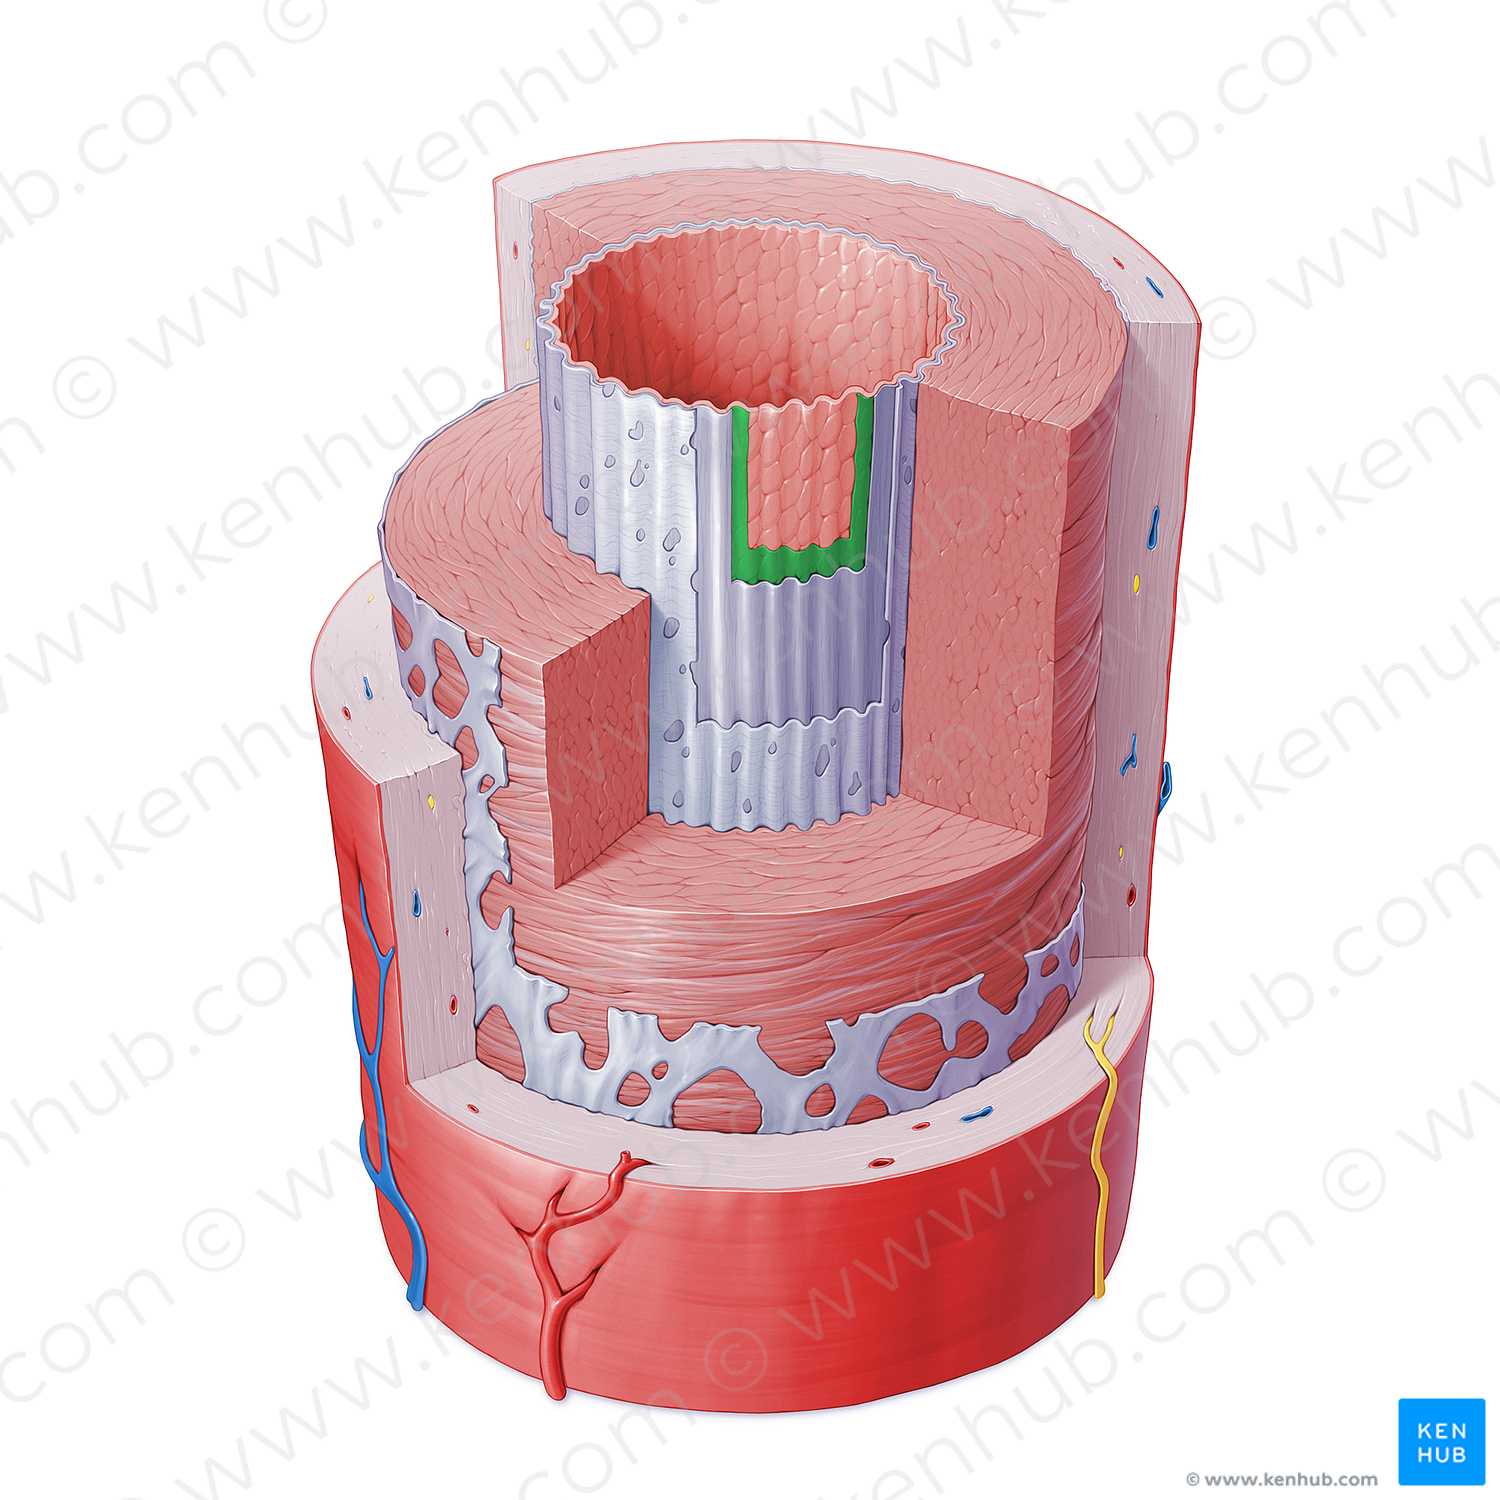 Basement membrane of artery (#16391)